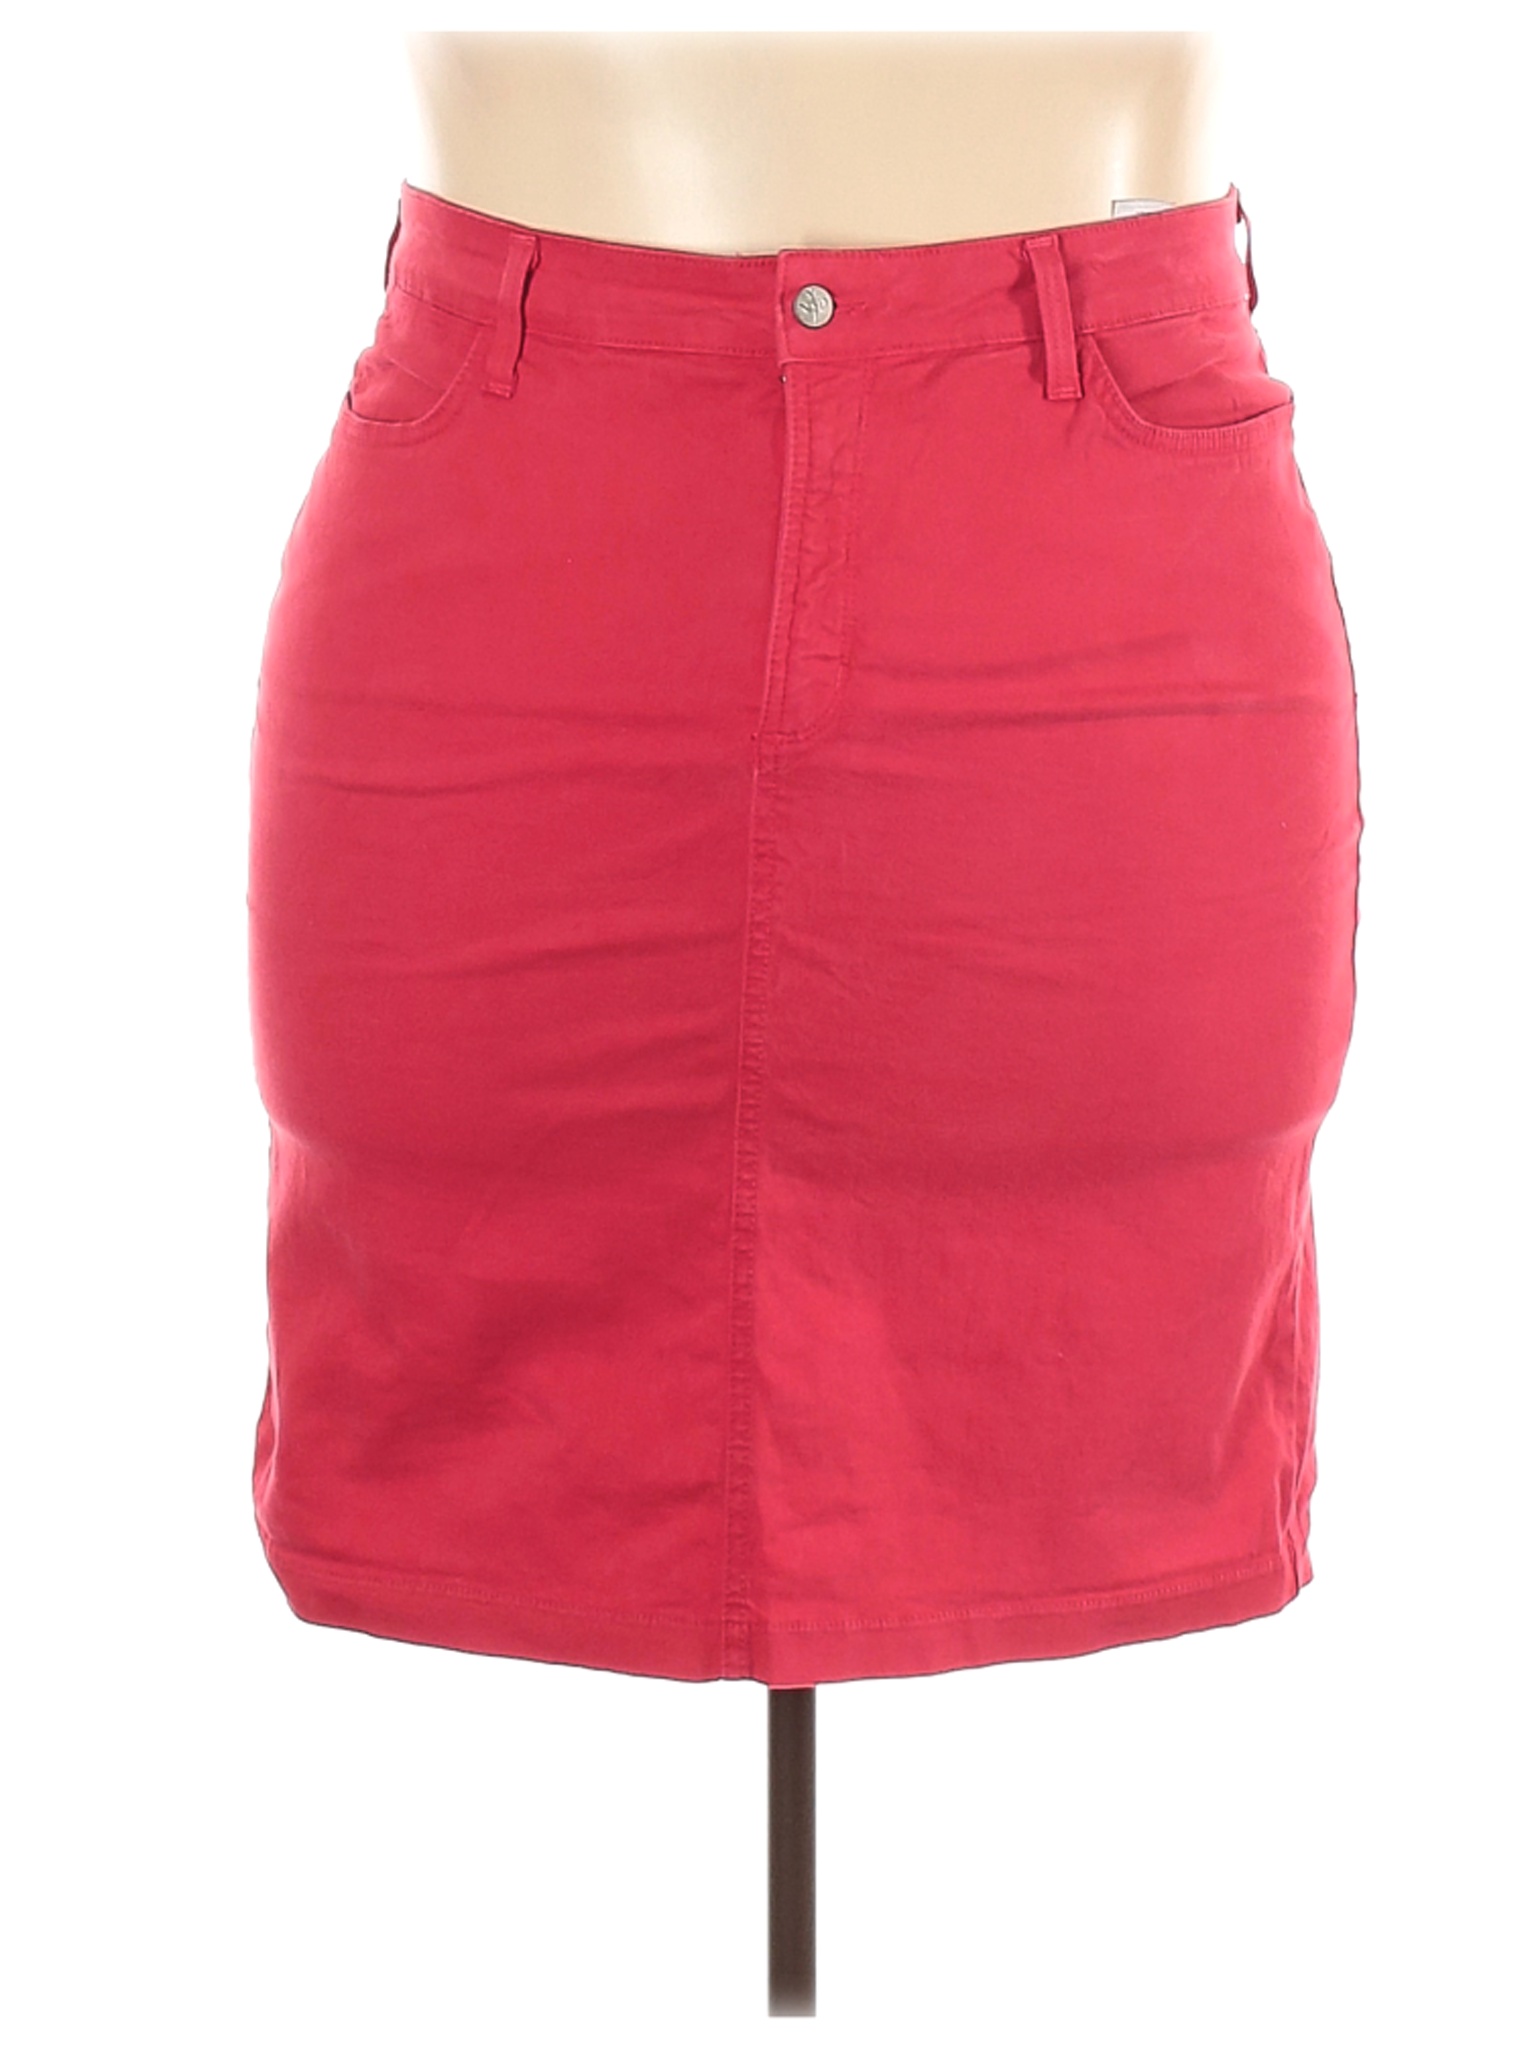 NYDJ Women Red Denim Skirt 22 Plus | eBay